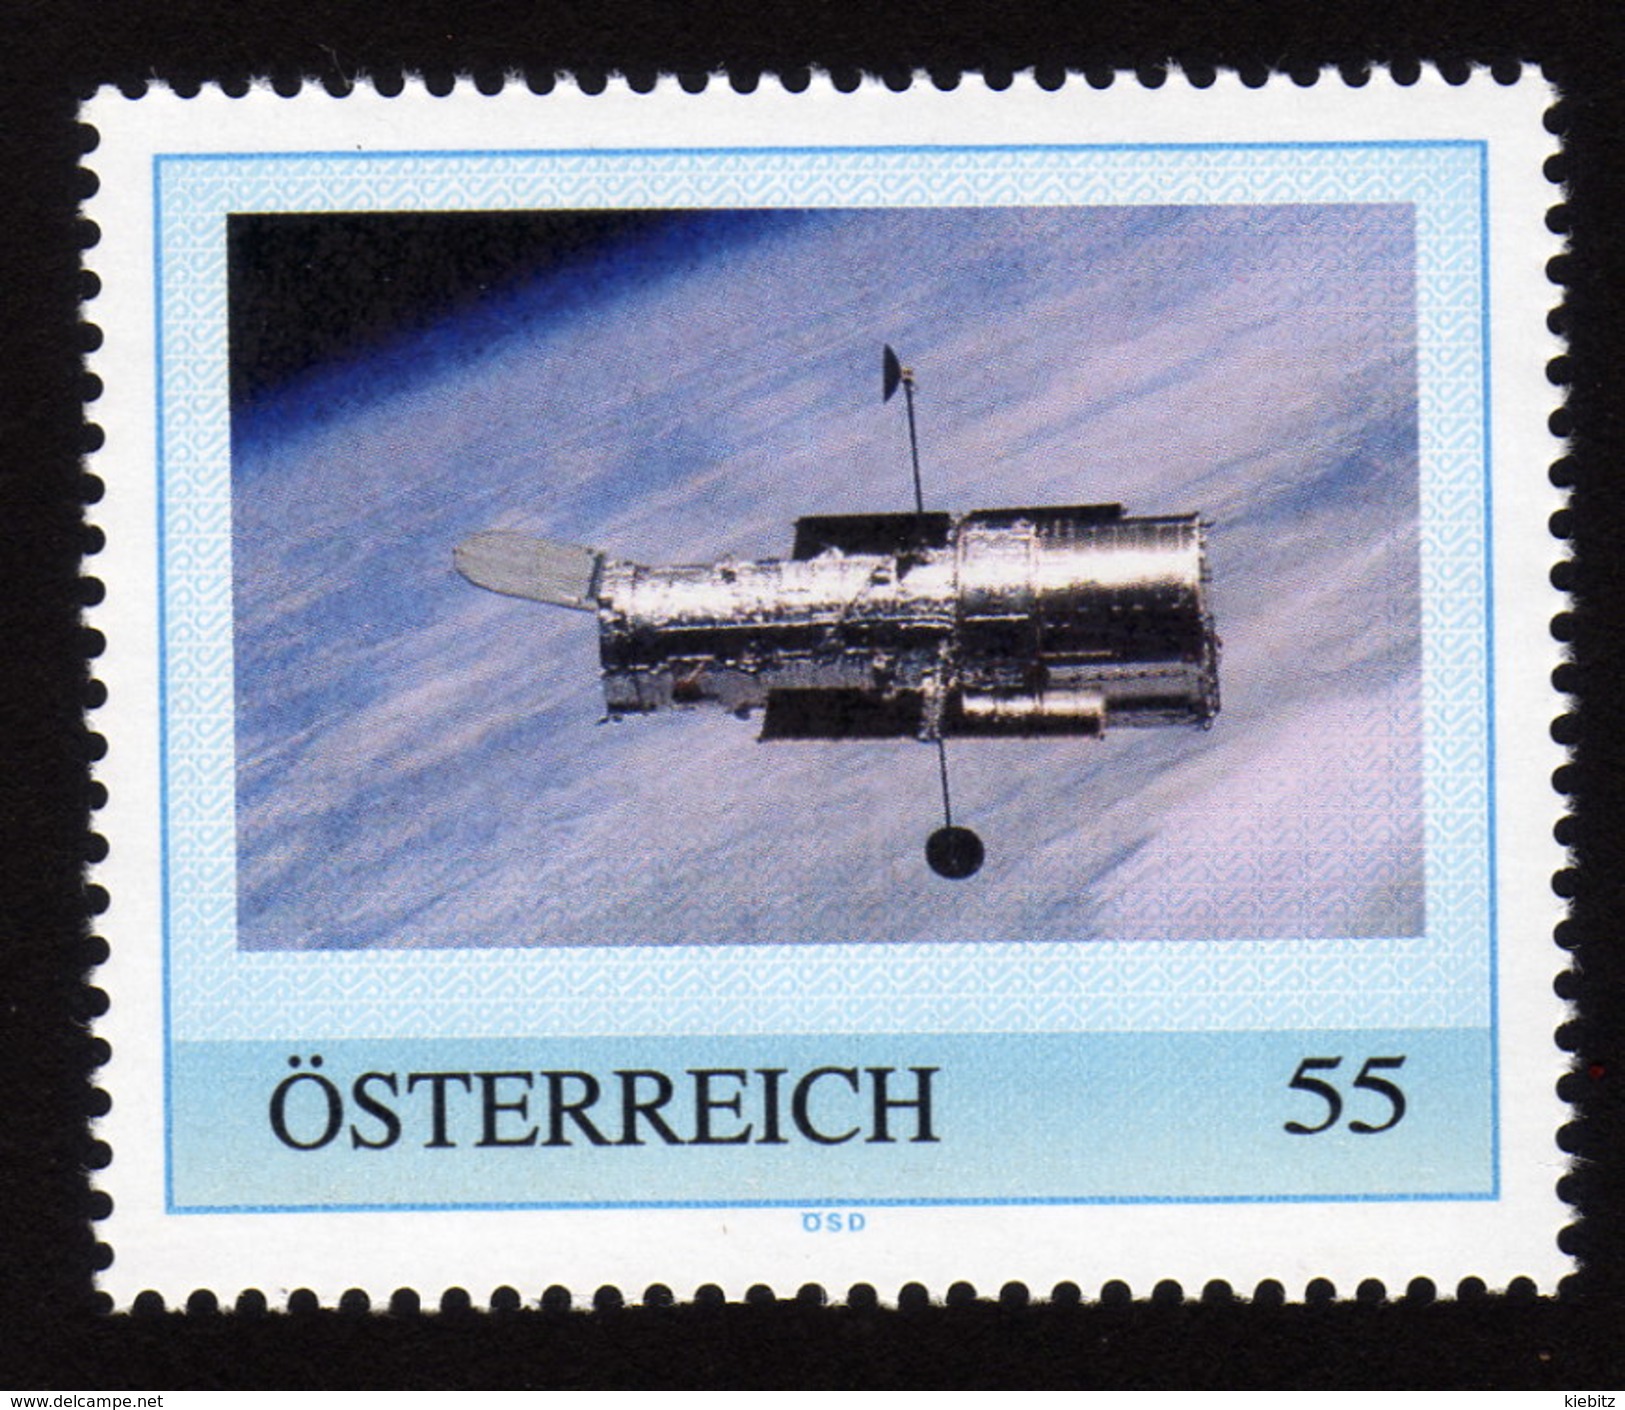 ÖSTERREICH 2009 ** Hubble Space Telescope über Der Erde - PM Personalized Stamp MNH - Astronomie